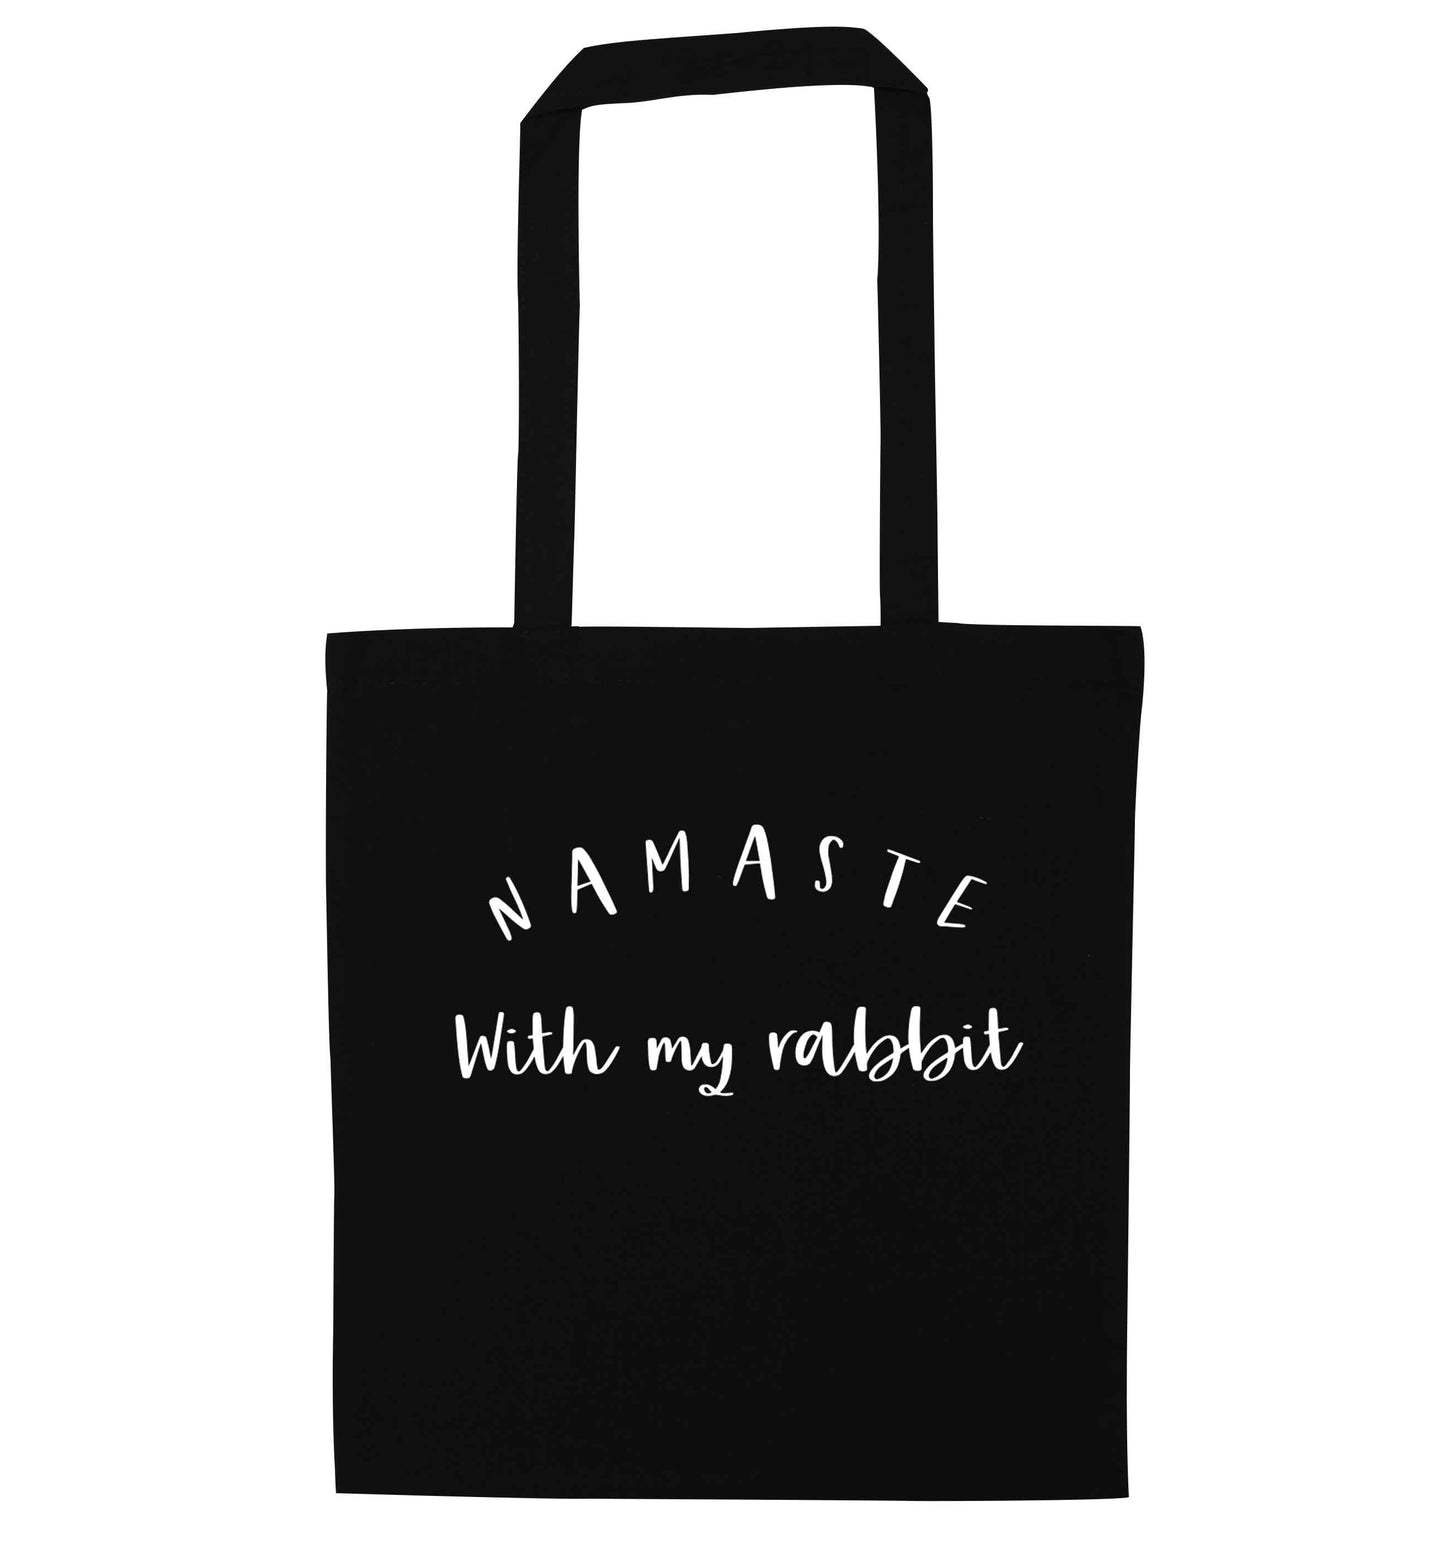 Namaste with my rabbit black tote bag